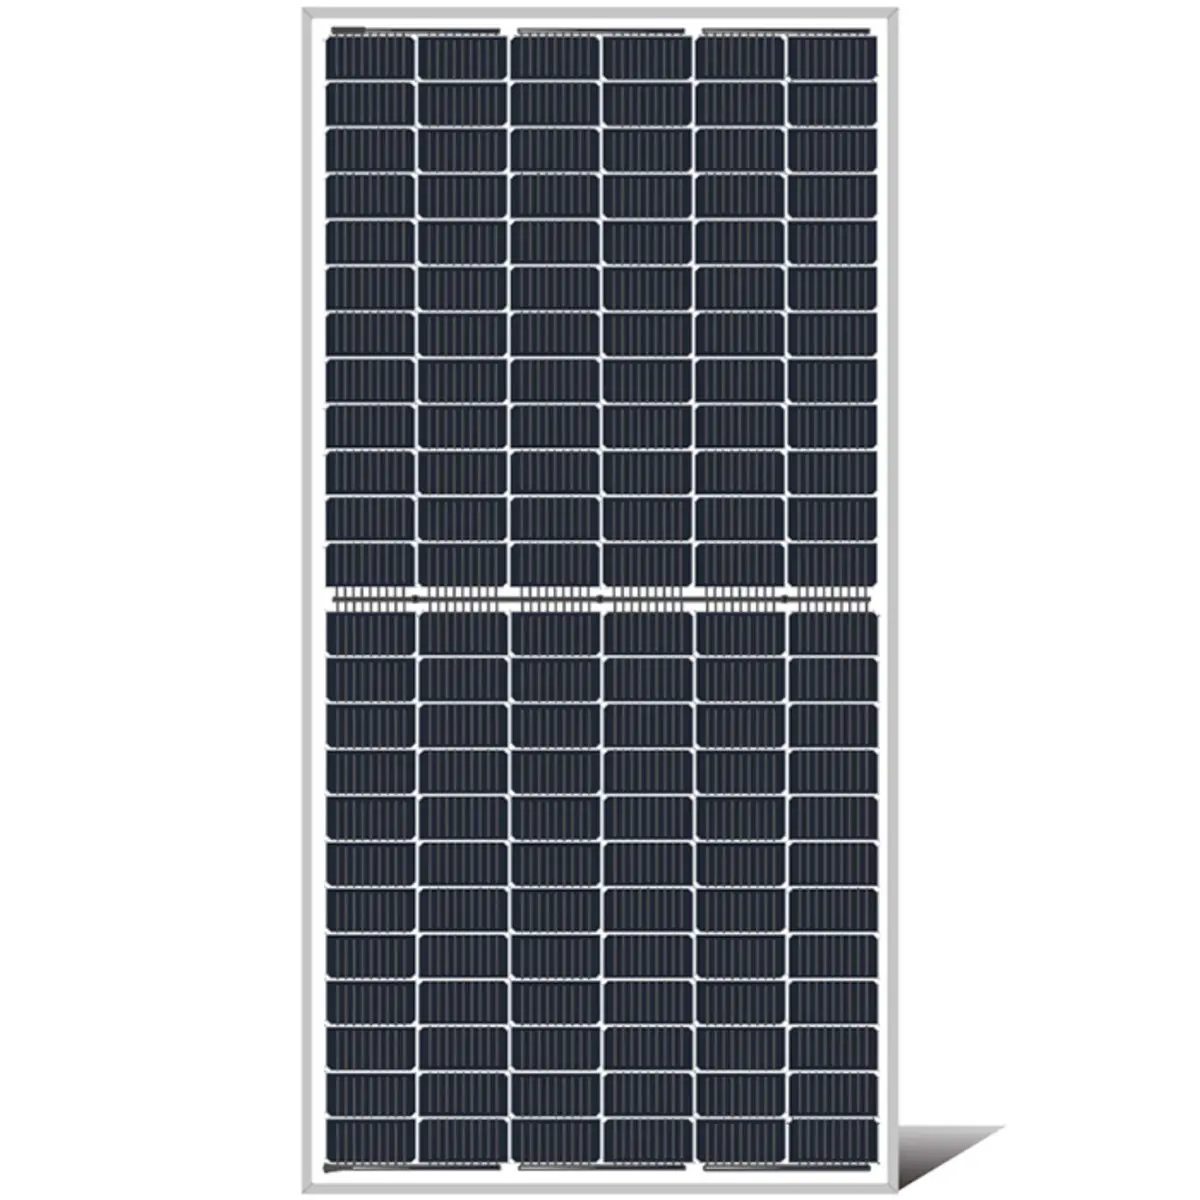 440 watt solar panel - What is the price of solar panel 440W